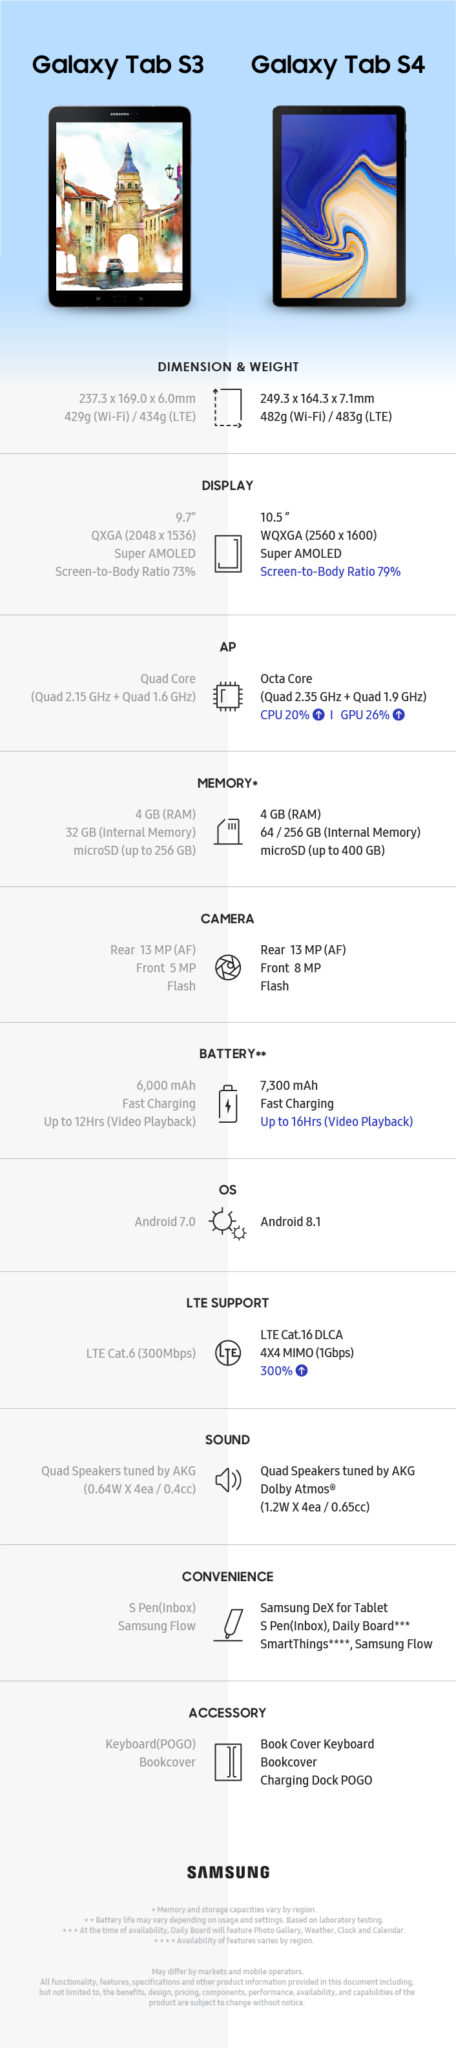 [Infographic] Spec Comparison: Galaxy Tab S3 vs. Galaxy Tab S4